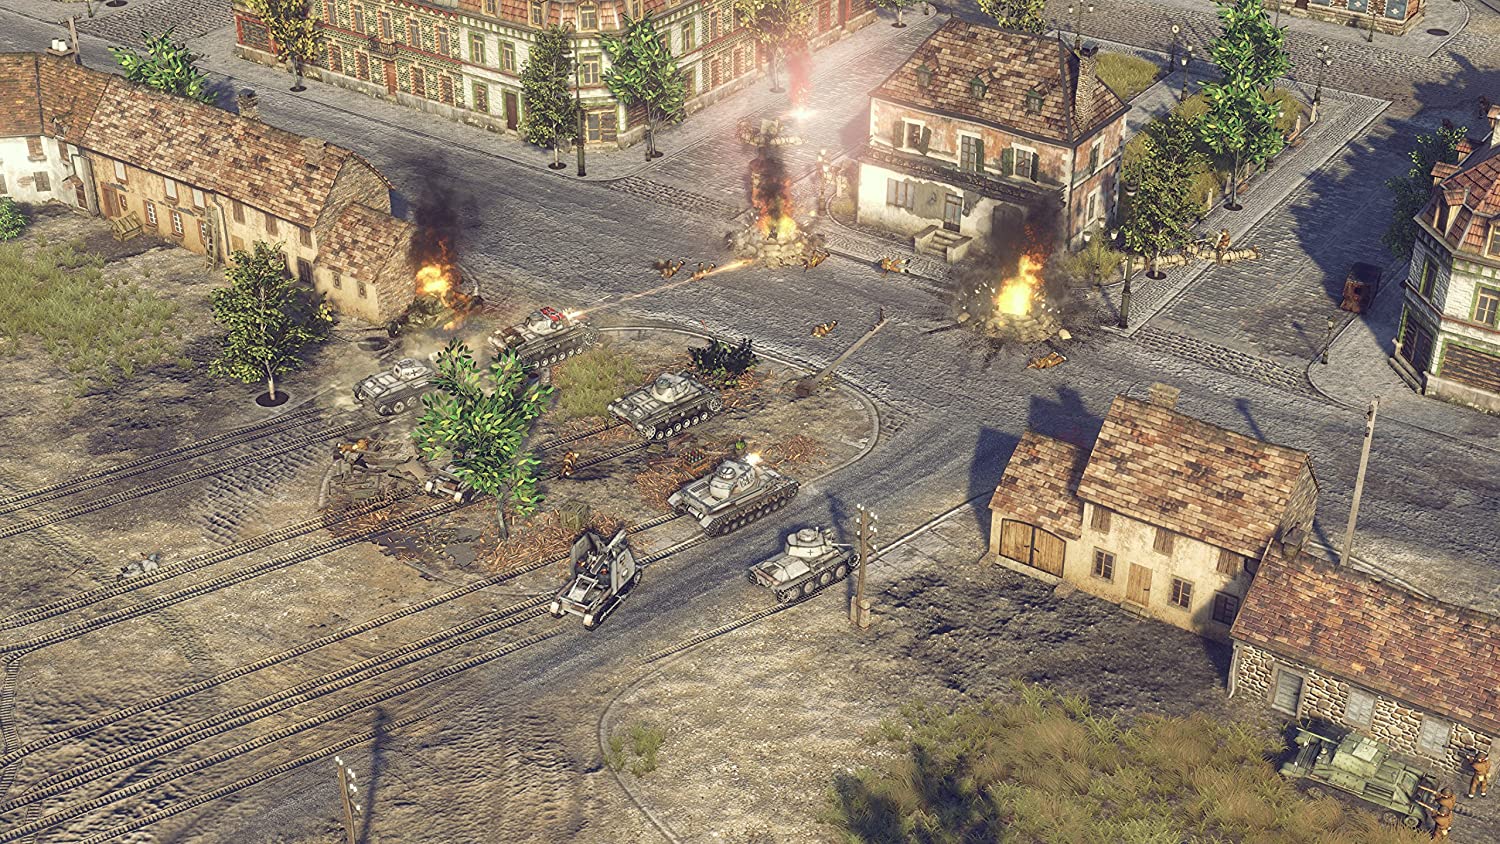 Xbox One Sudden Strike 4 European Battlefields Edition EU